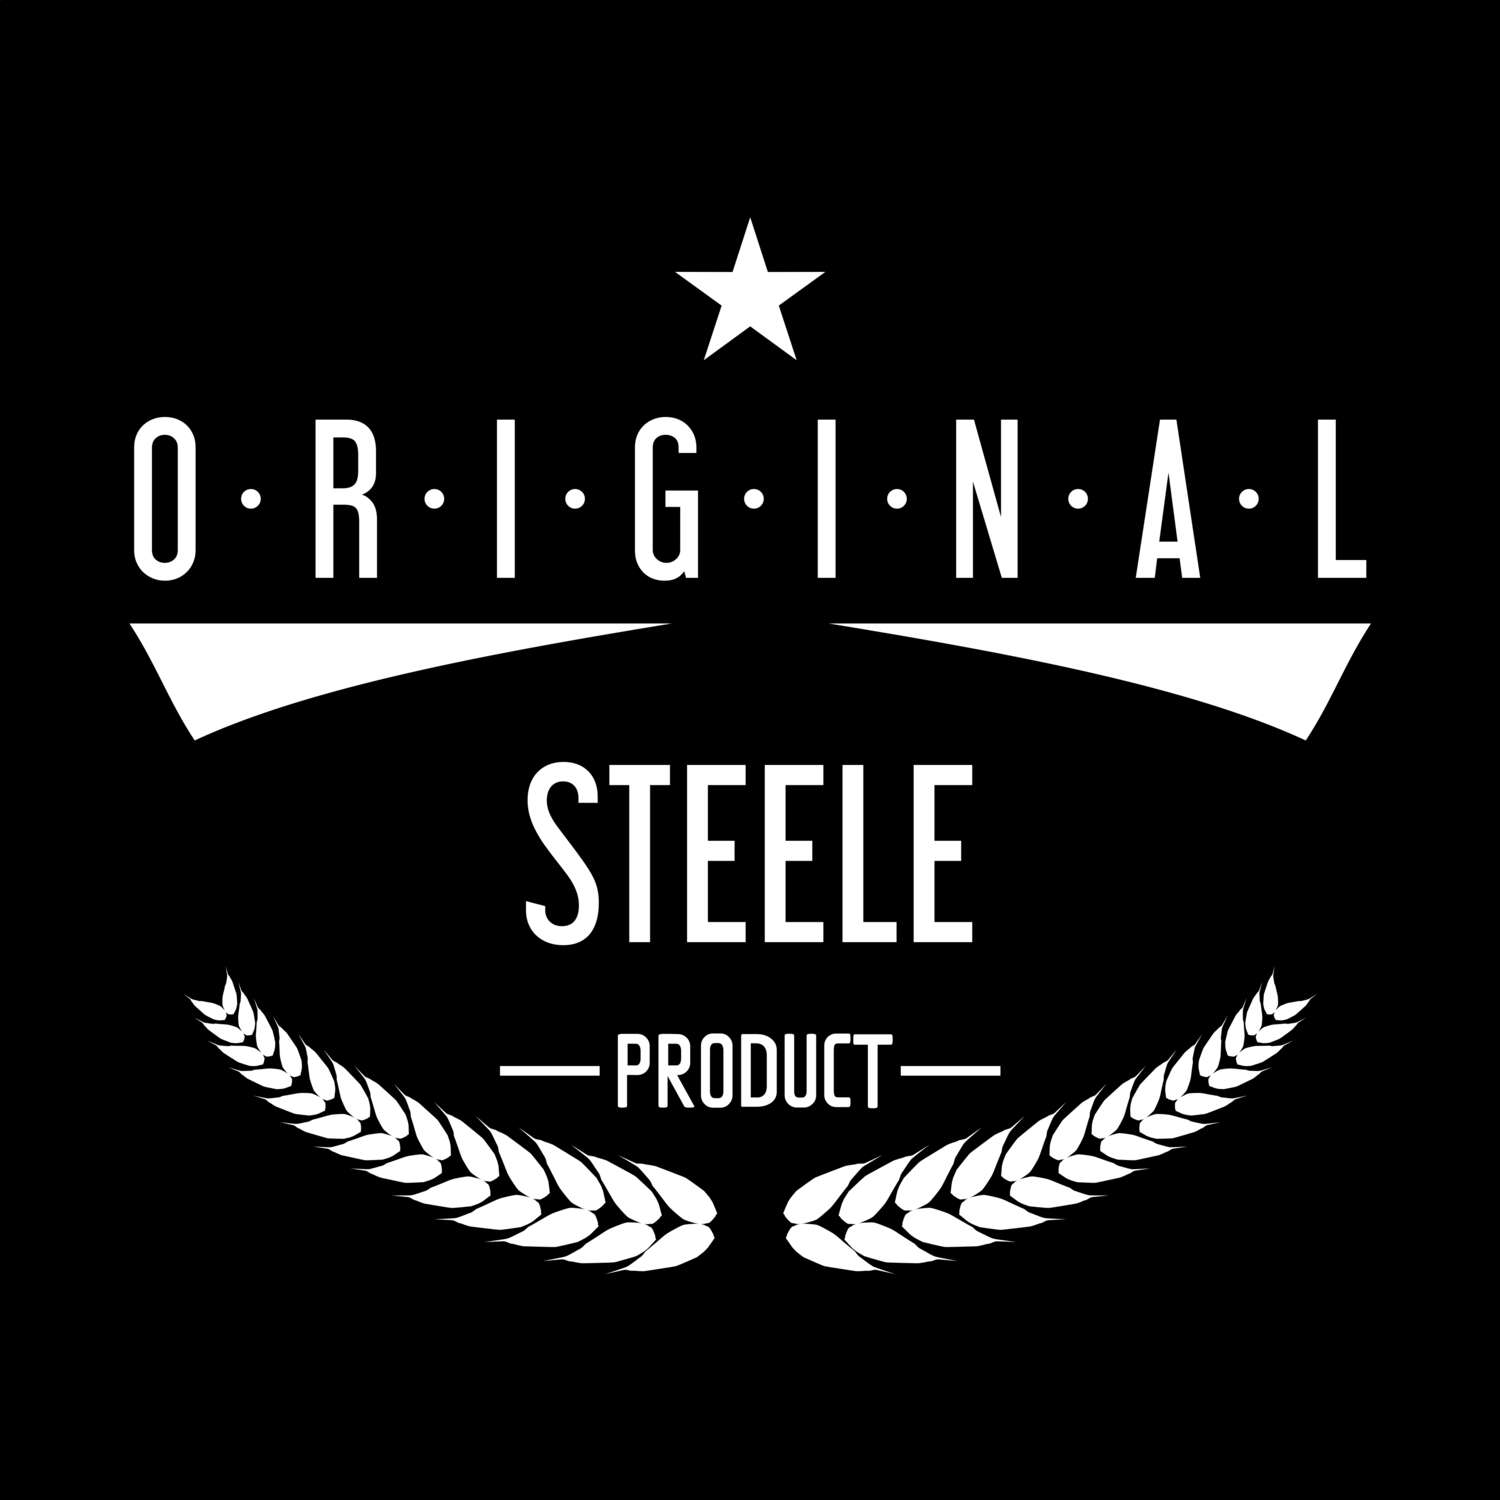 Steele T-Shirt »Original Product«